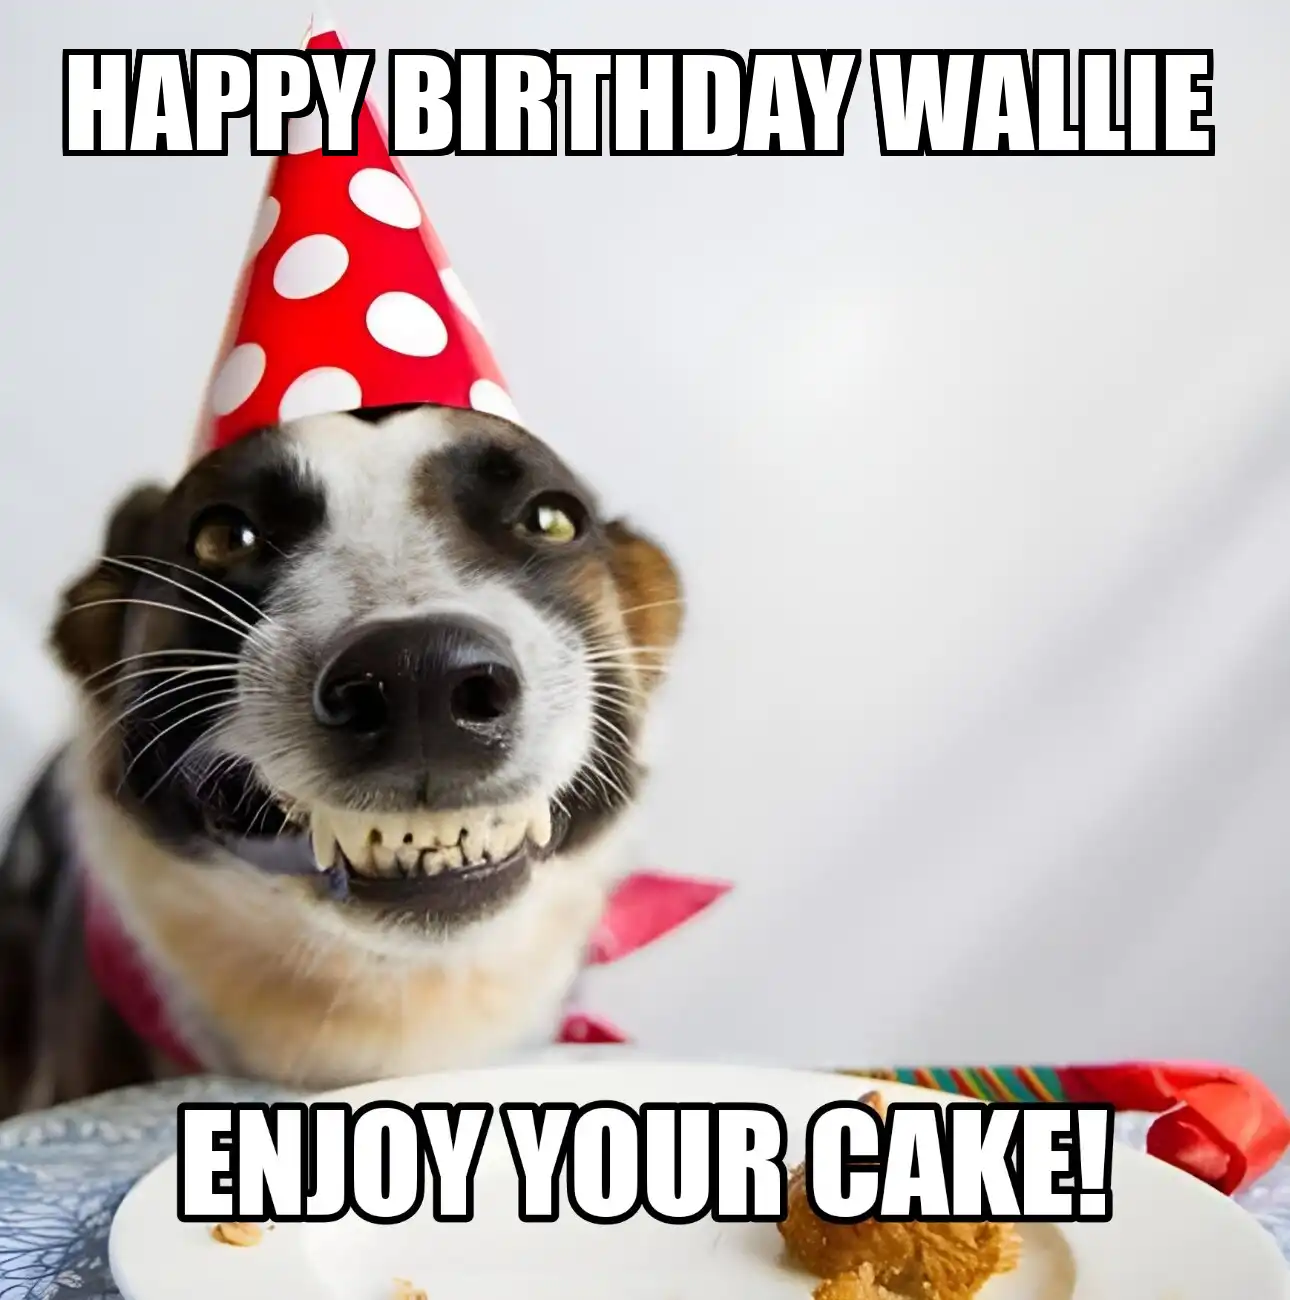 Happy Birthday Wallie Enjoy Your Cake Dog Meme